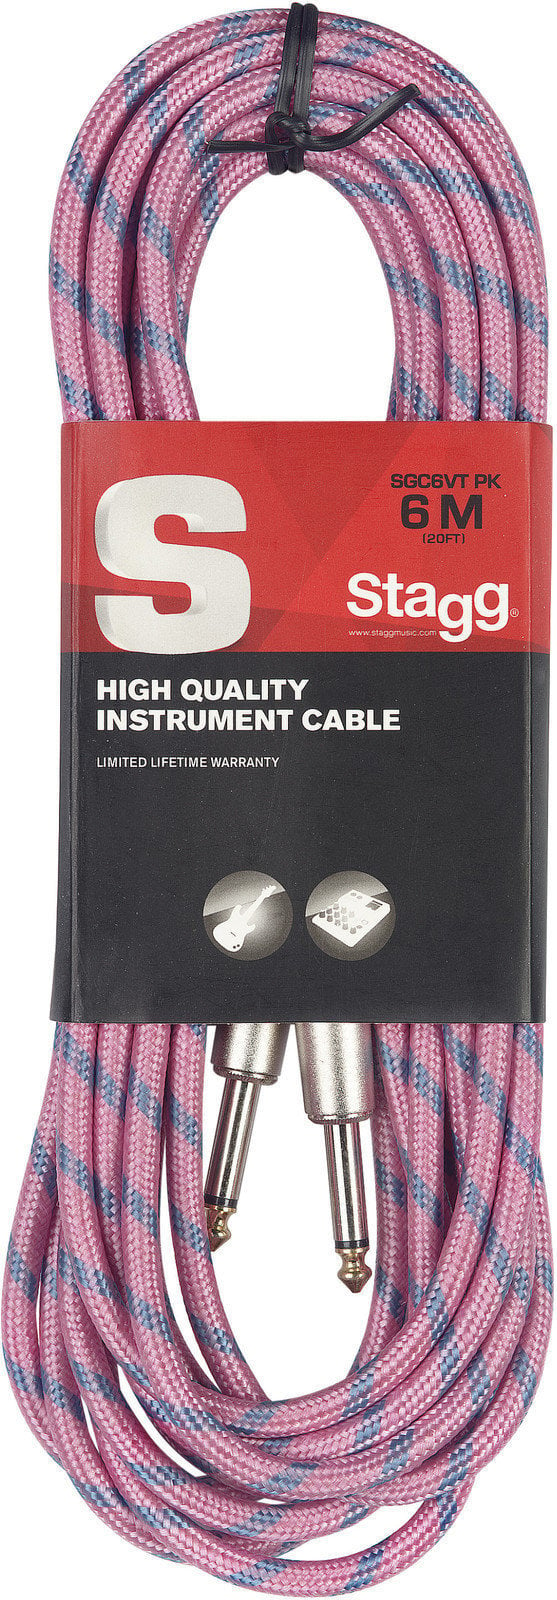 Cablu instrumente Stagg SGC6VT Roz 6 m Drept - Drept